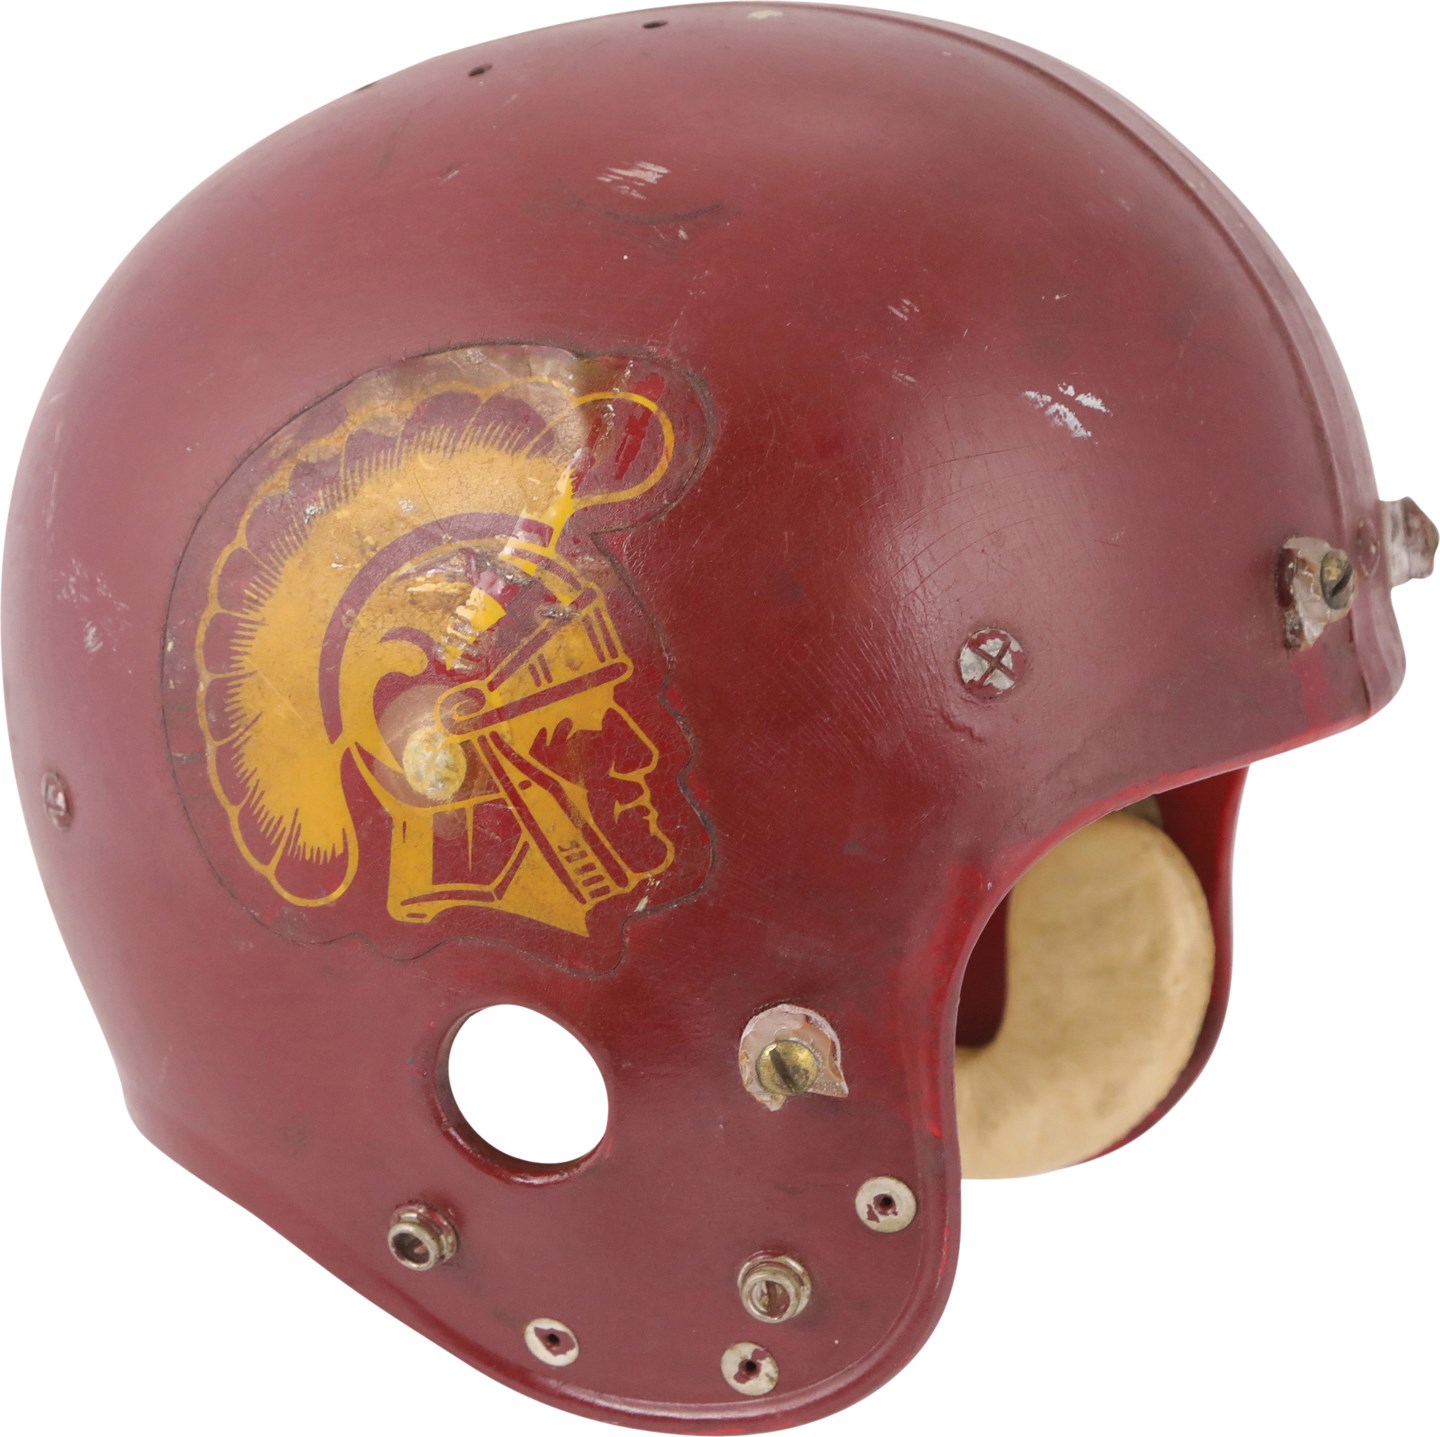 - 1974 George Stewart National Championship USC Trojans Game Used Helmet